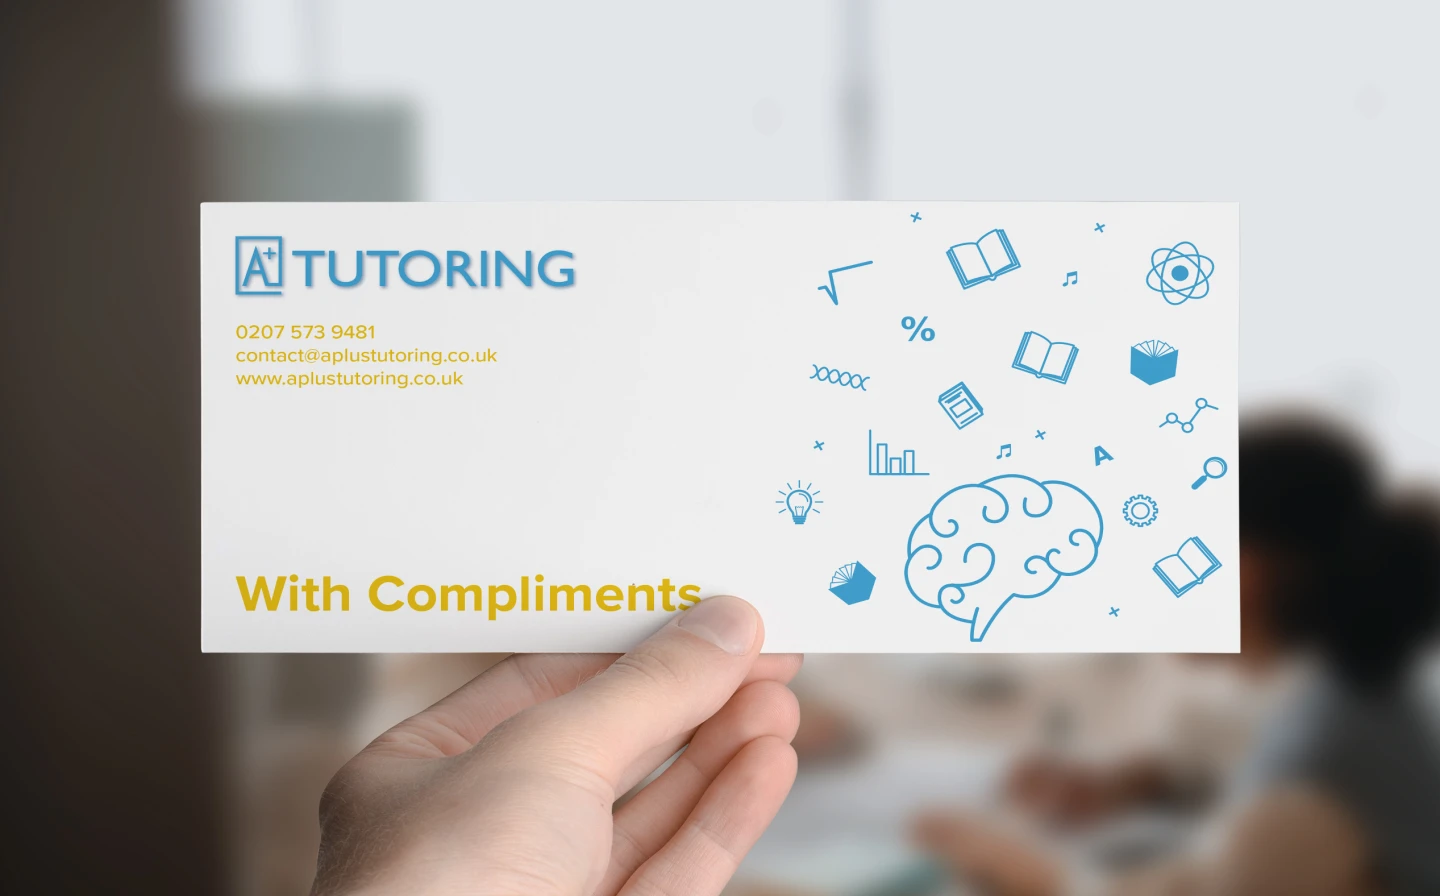 Students&Education_Tutoring&Training_BusinessComplimentSlips_1